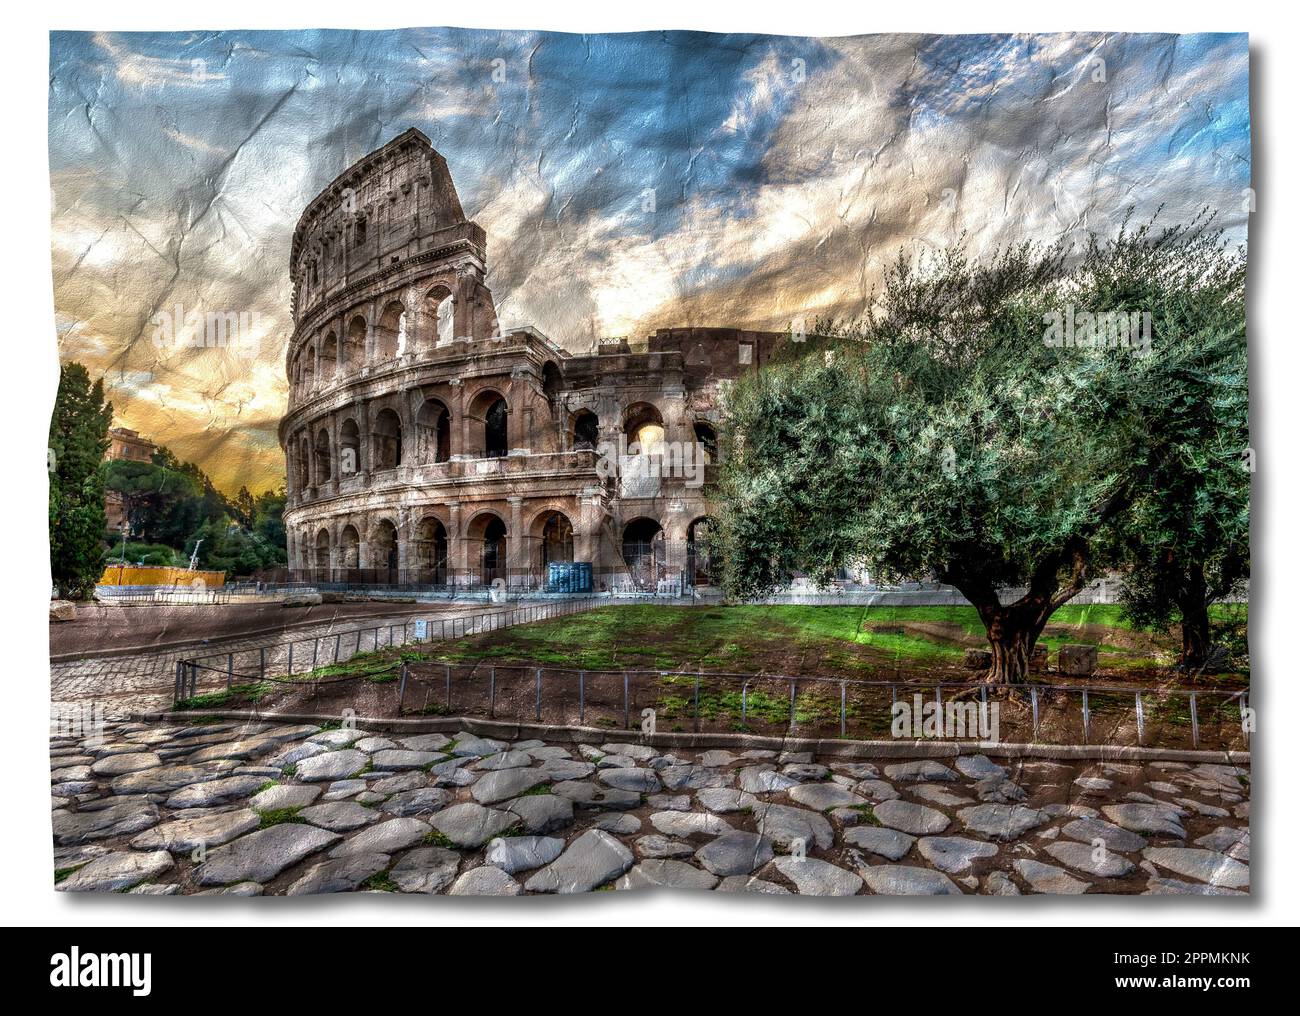 Italien, Rom - Sonnenuntergang hinter dem Kolosseum, dem berühmtesten römischen Wahrzeichen. Stockfoto